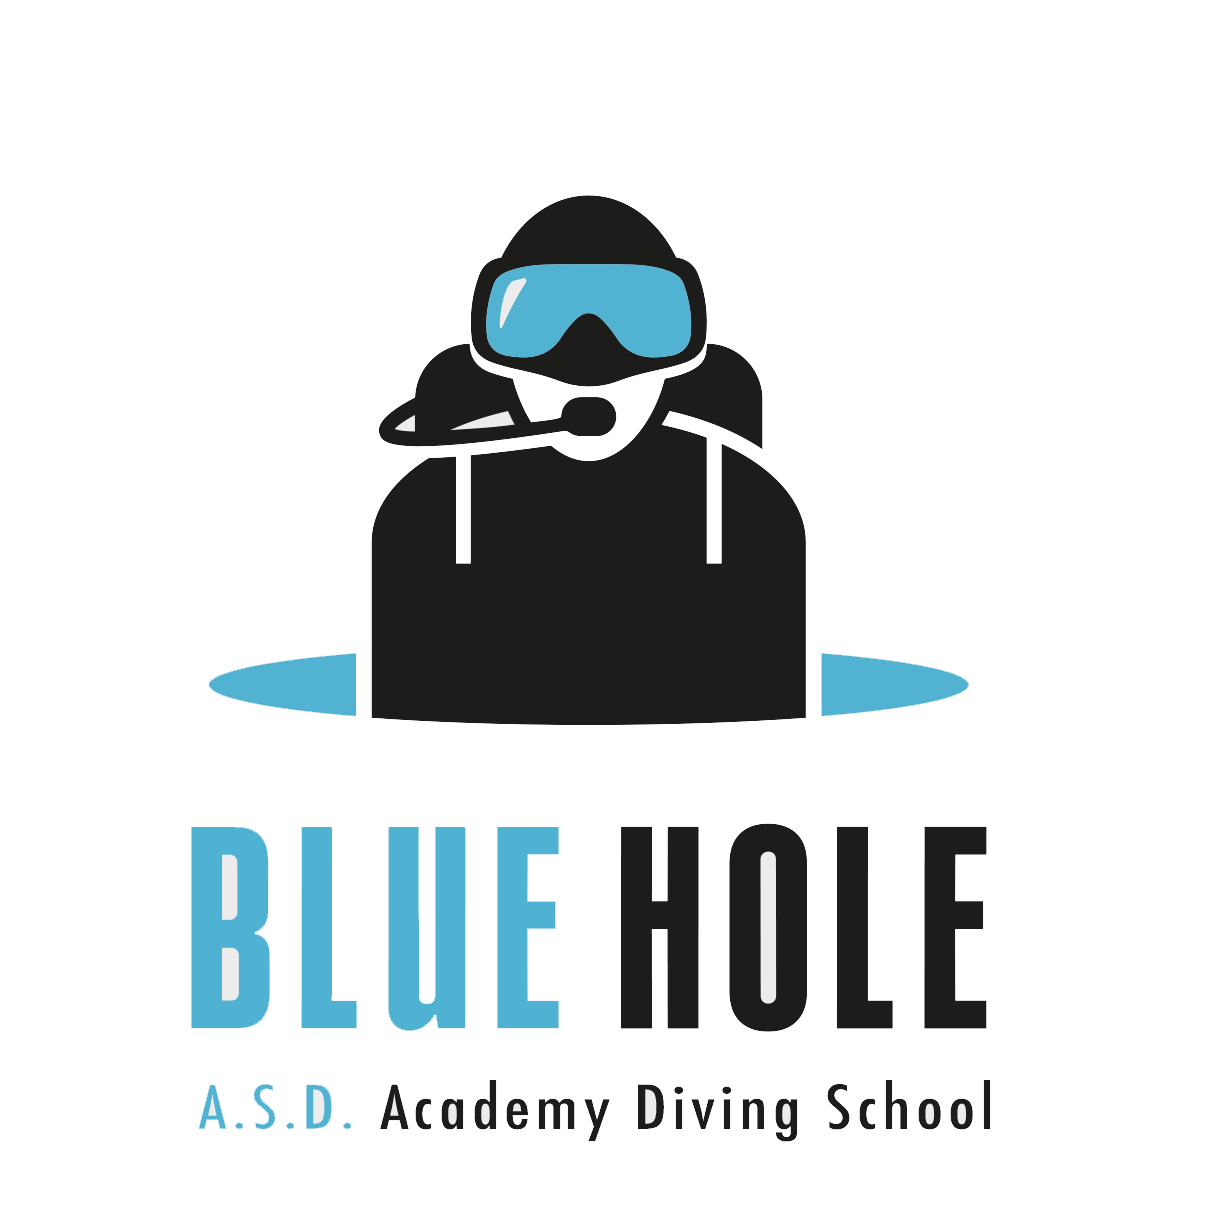 Blue Hole Academy